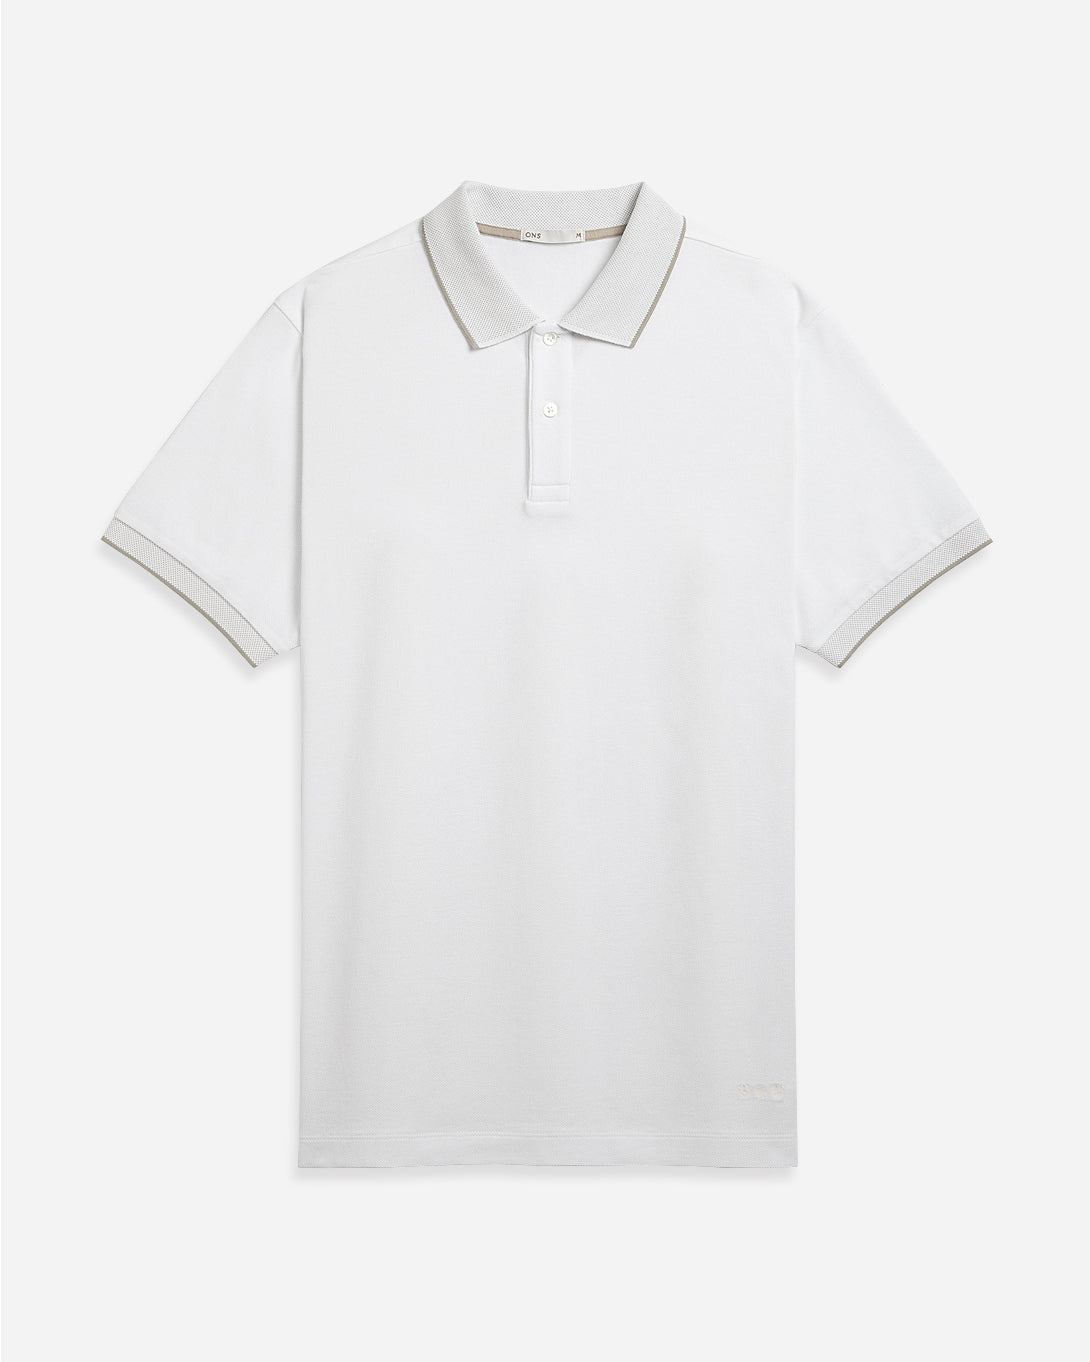 Bright White Bennet Pique Polo Mens Seasonal Shirt Two Toned